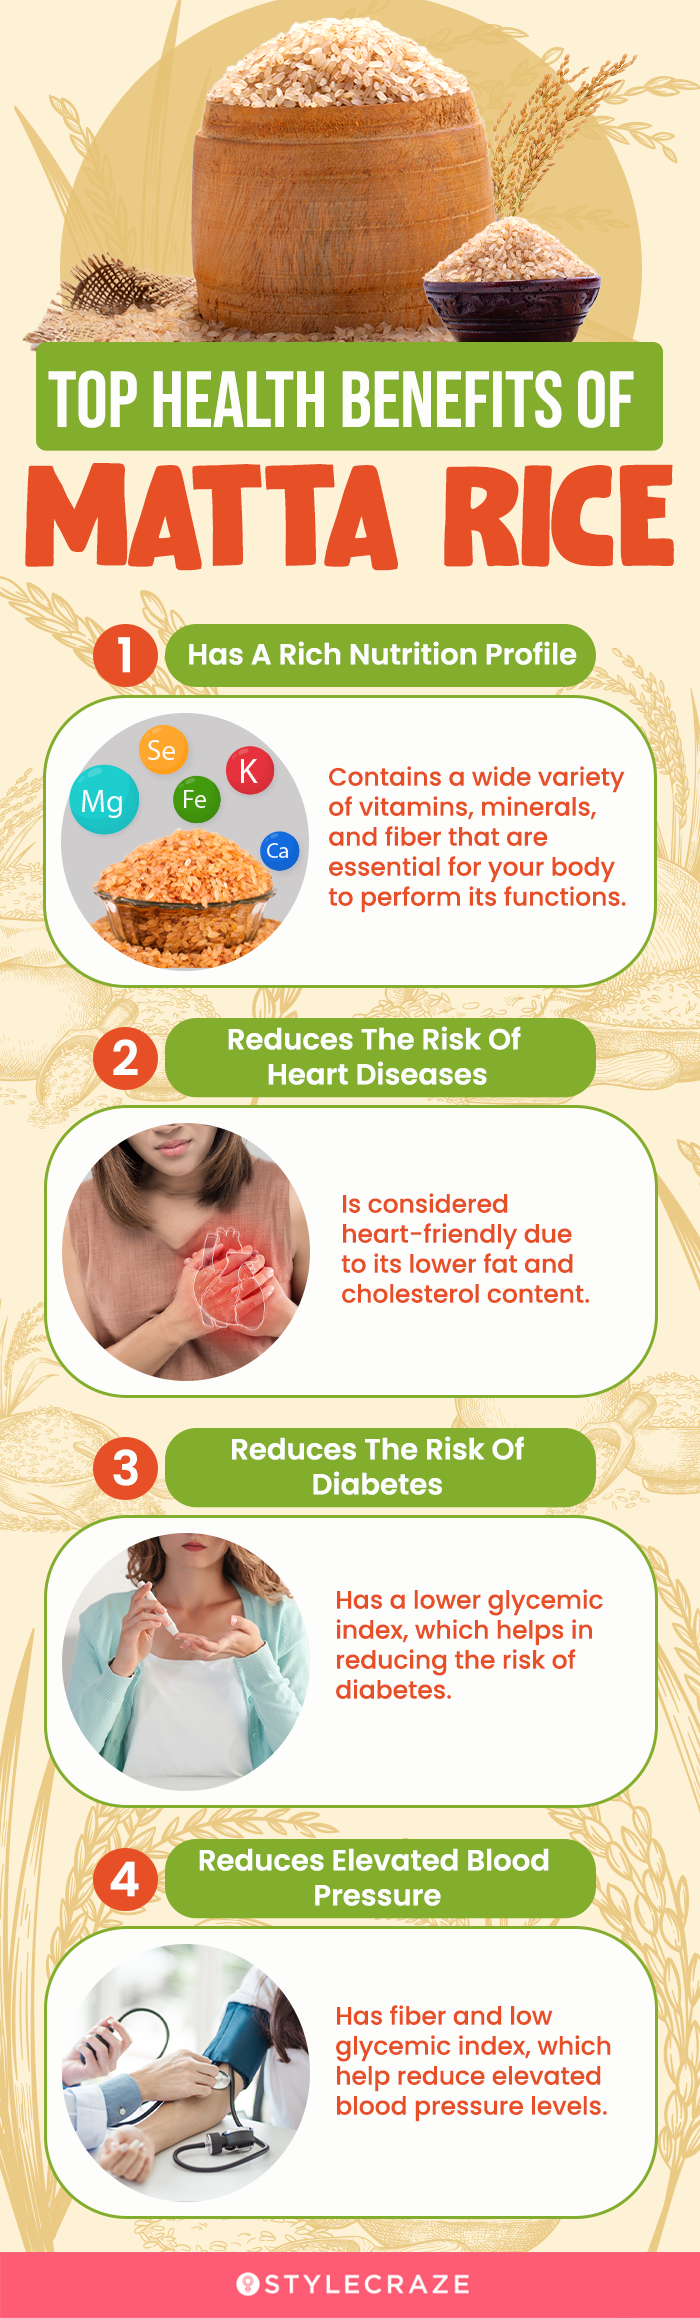 top health benefits of matta rice (infographic)